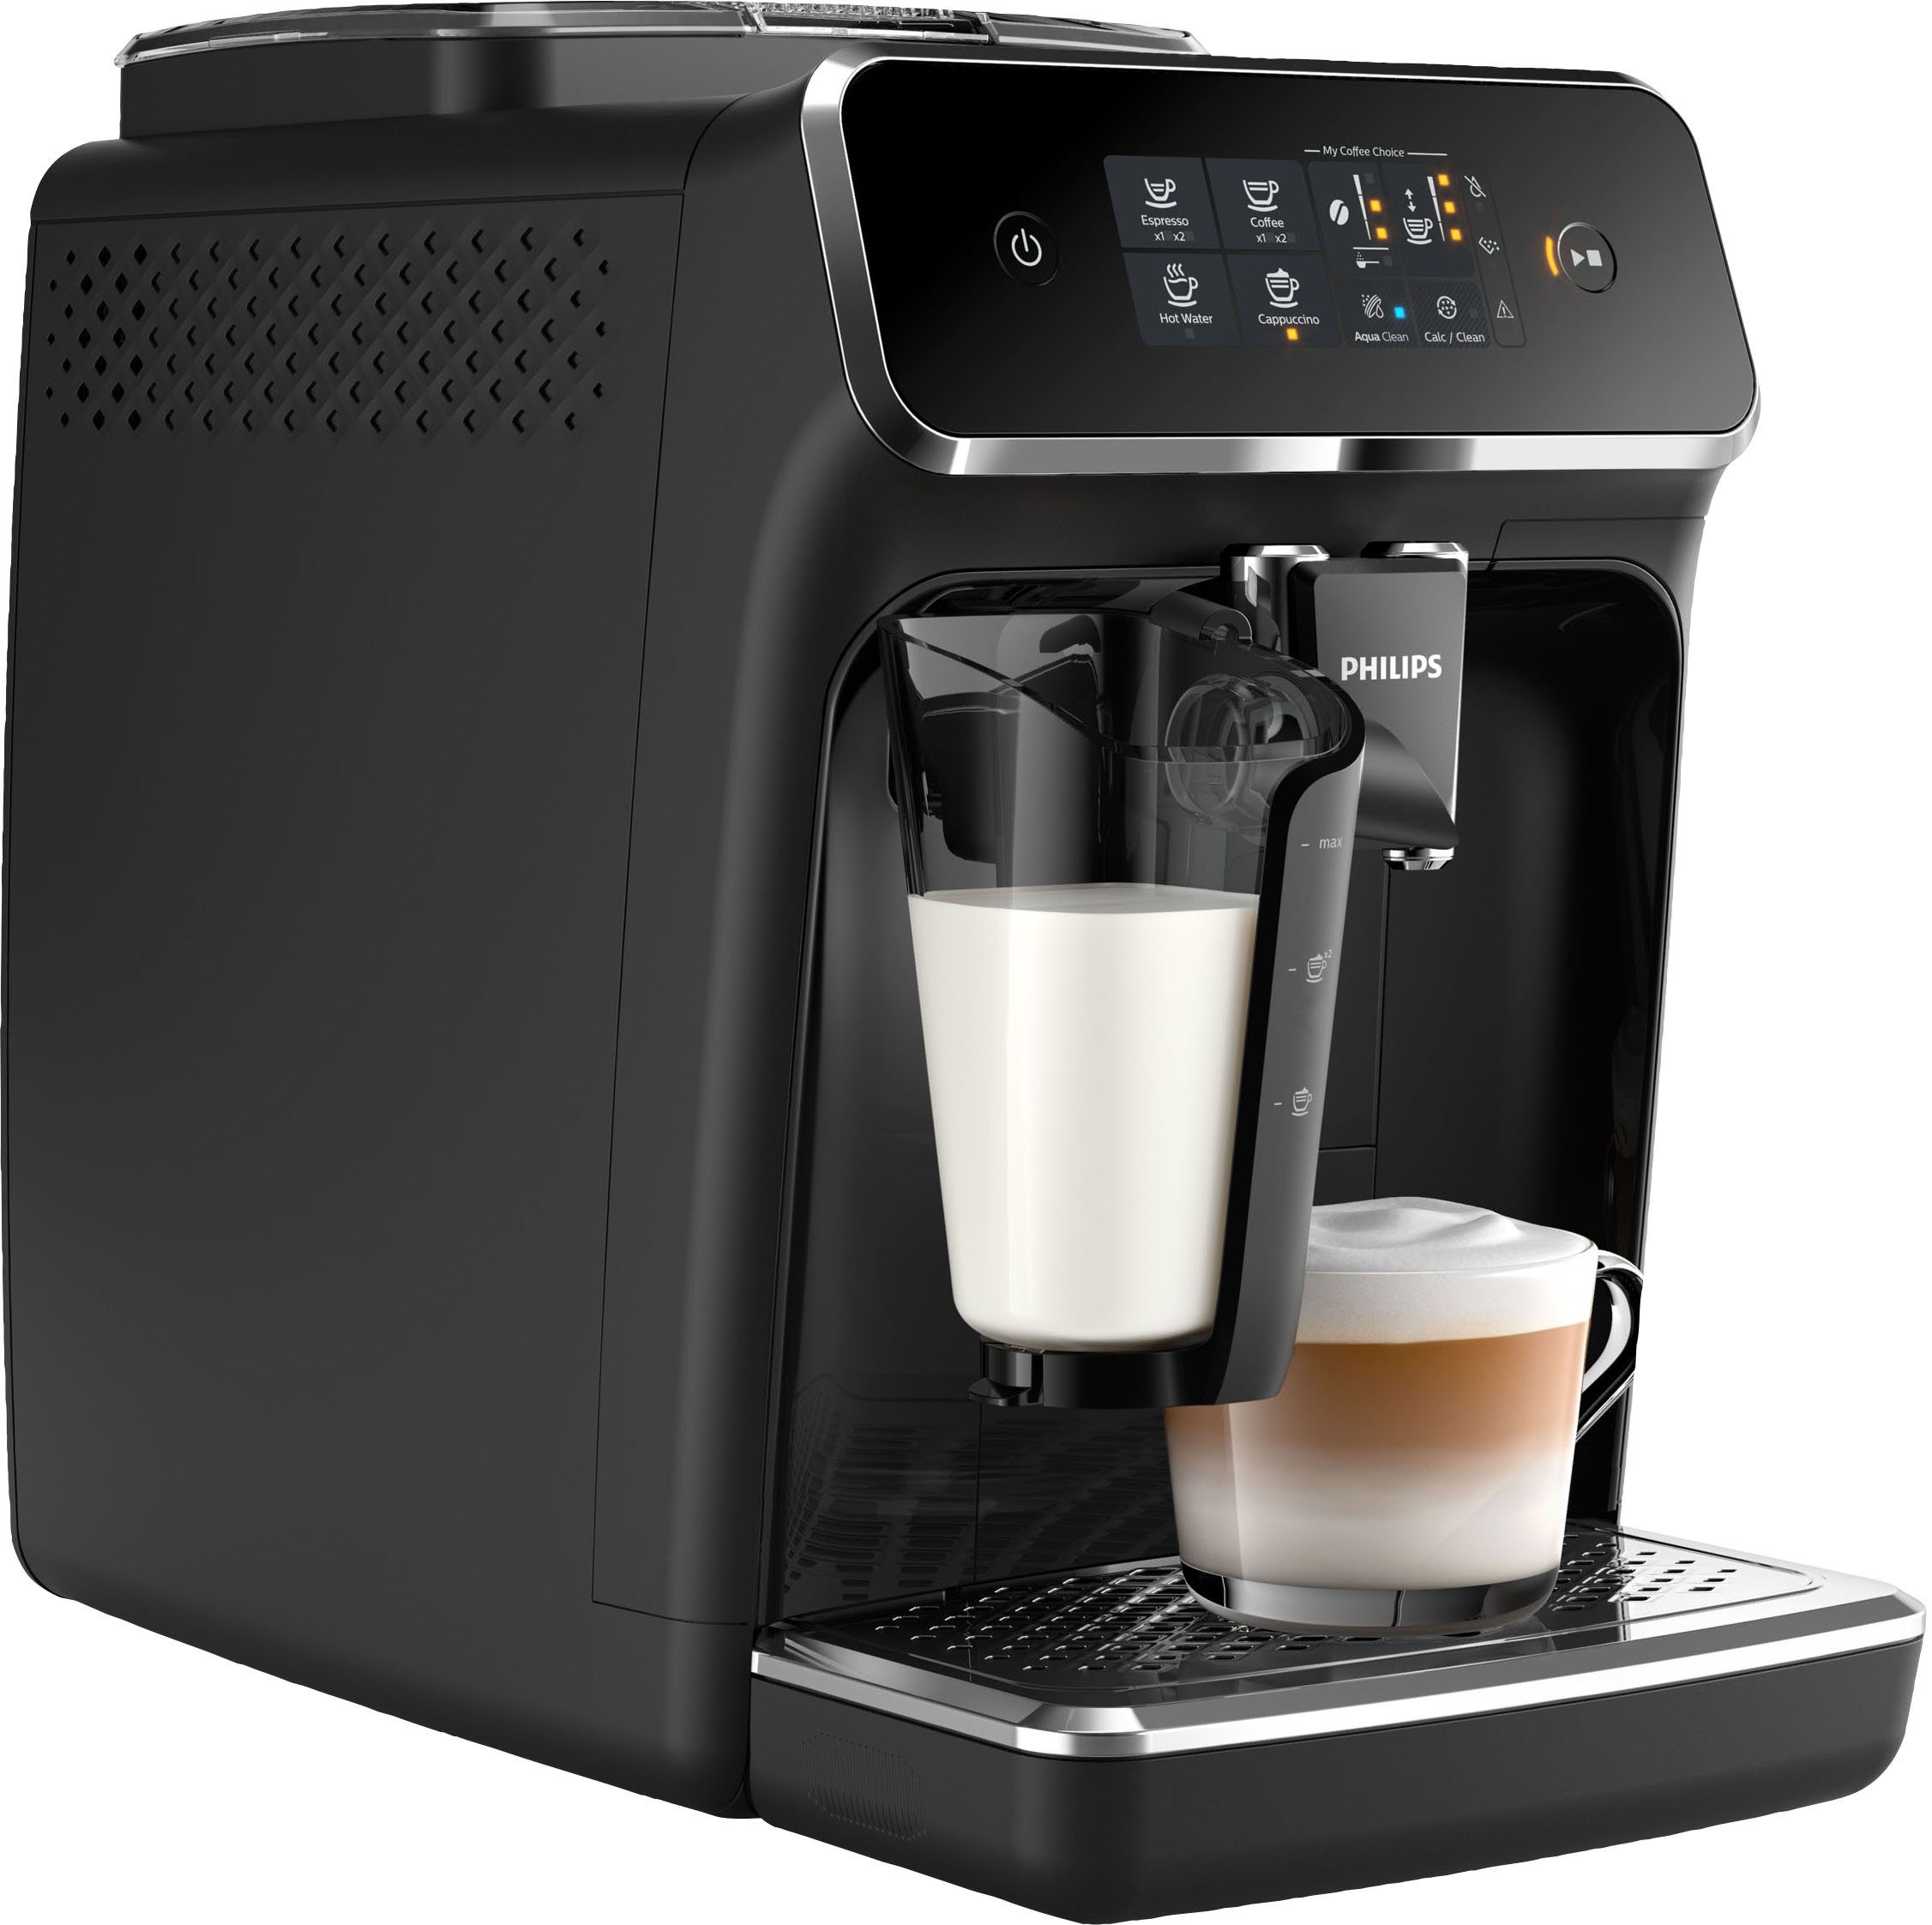 SensorTouch Anpassung von EP2231/40 Temperatur 2200 Individuelle Kaffeevollautomat Stärke, Kaffeespezialitäten, Oberfläche, und Füllmenge 3 Serie LatteGo, Philips